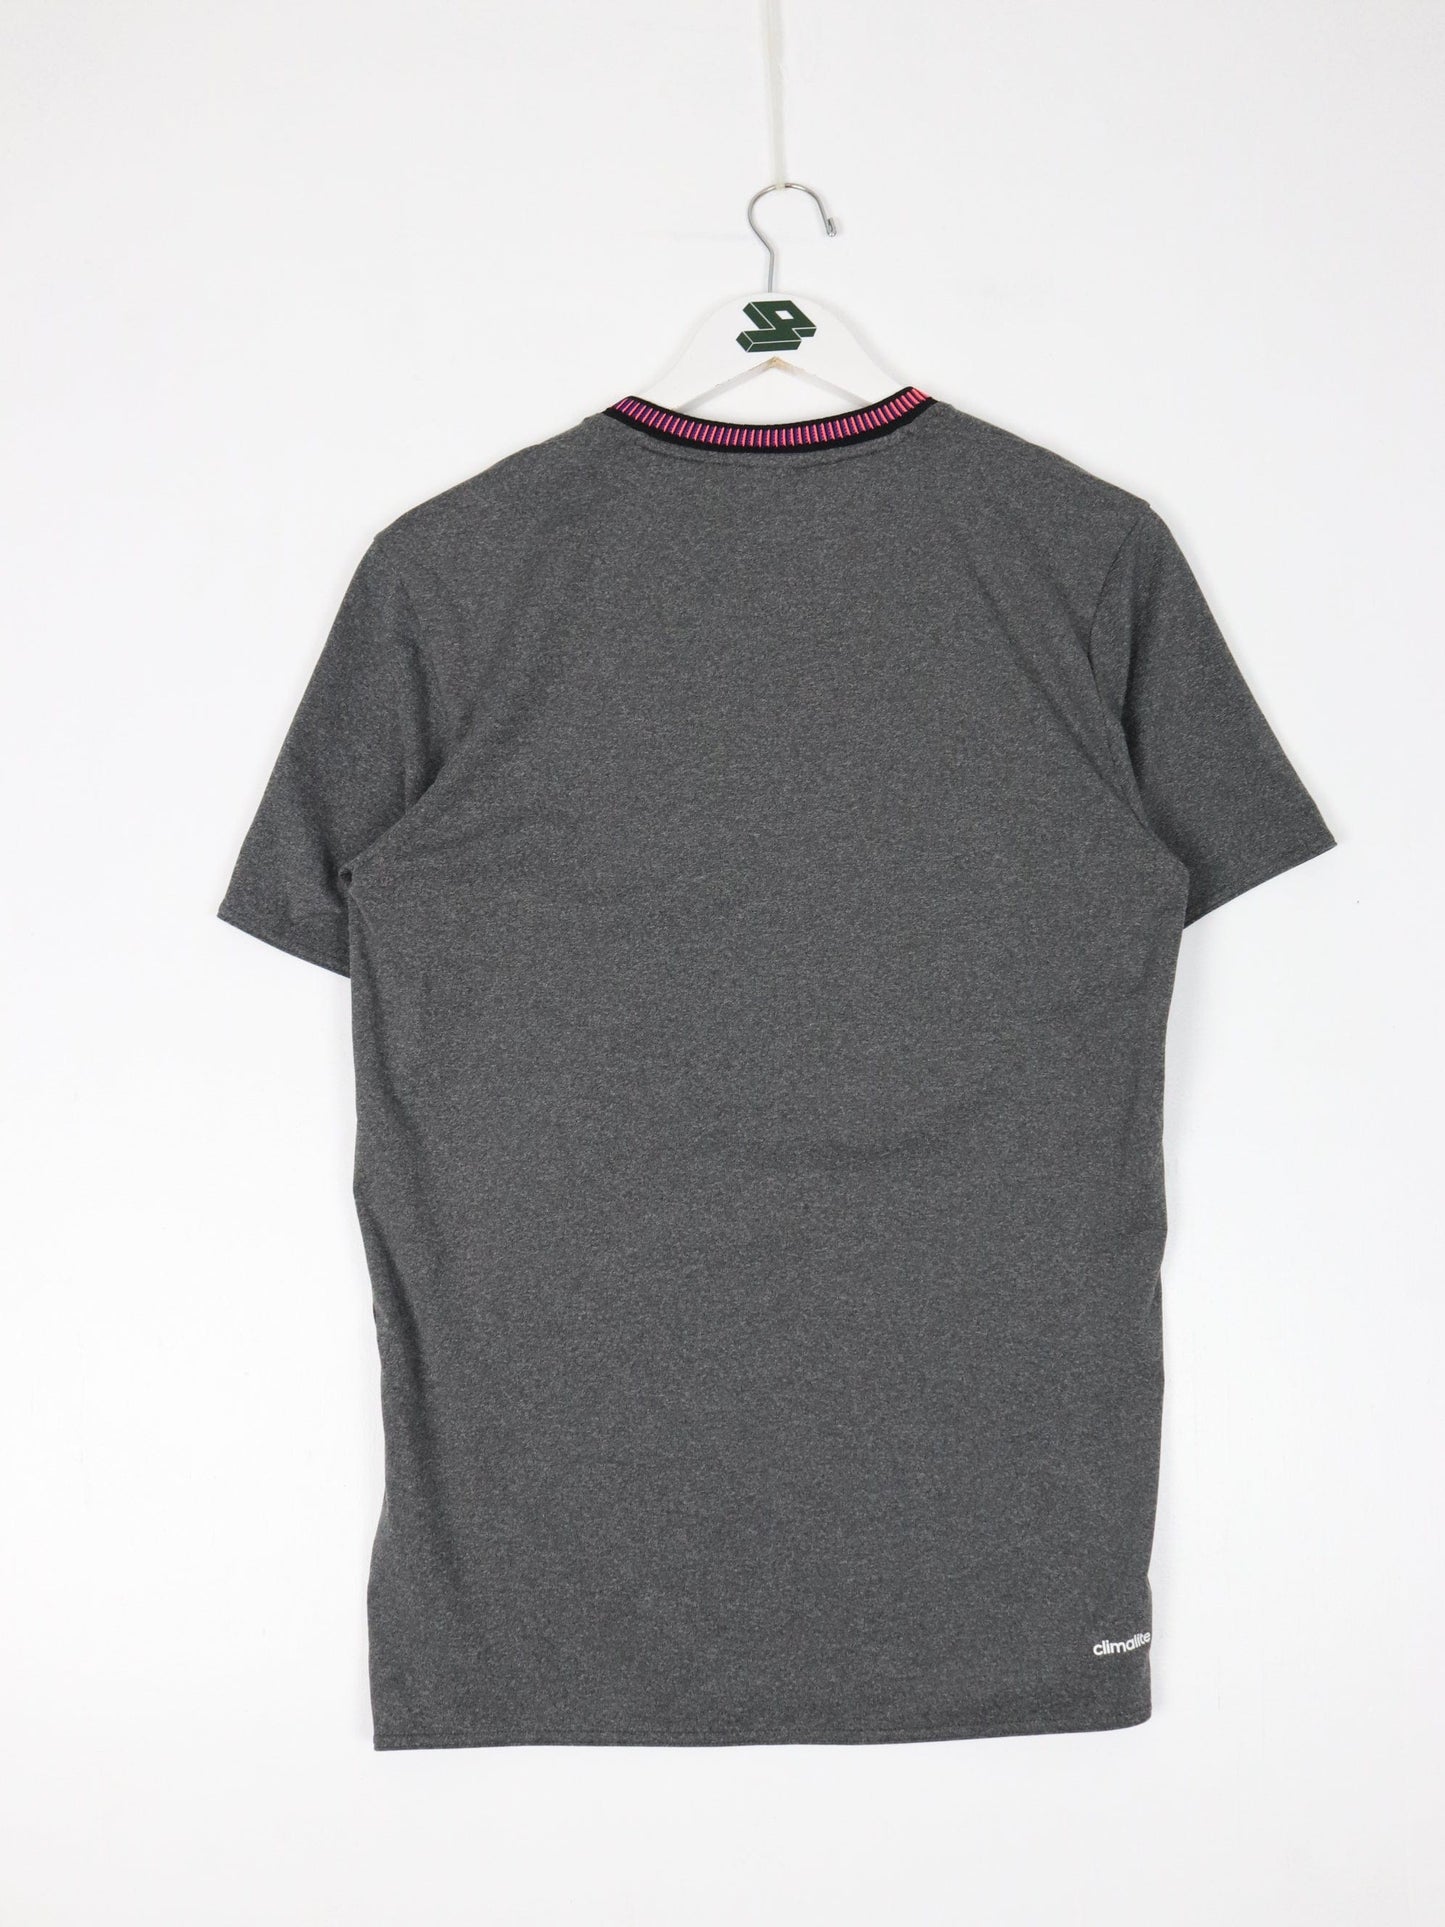 Adidas T-Shirts & Tank Tops Messi T Shirt Mens Small Adidas Climalite Jersey Athletic Active Soccer